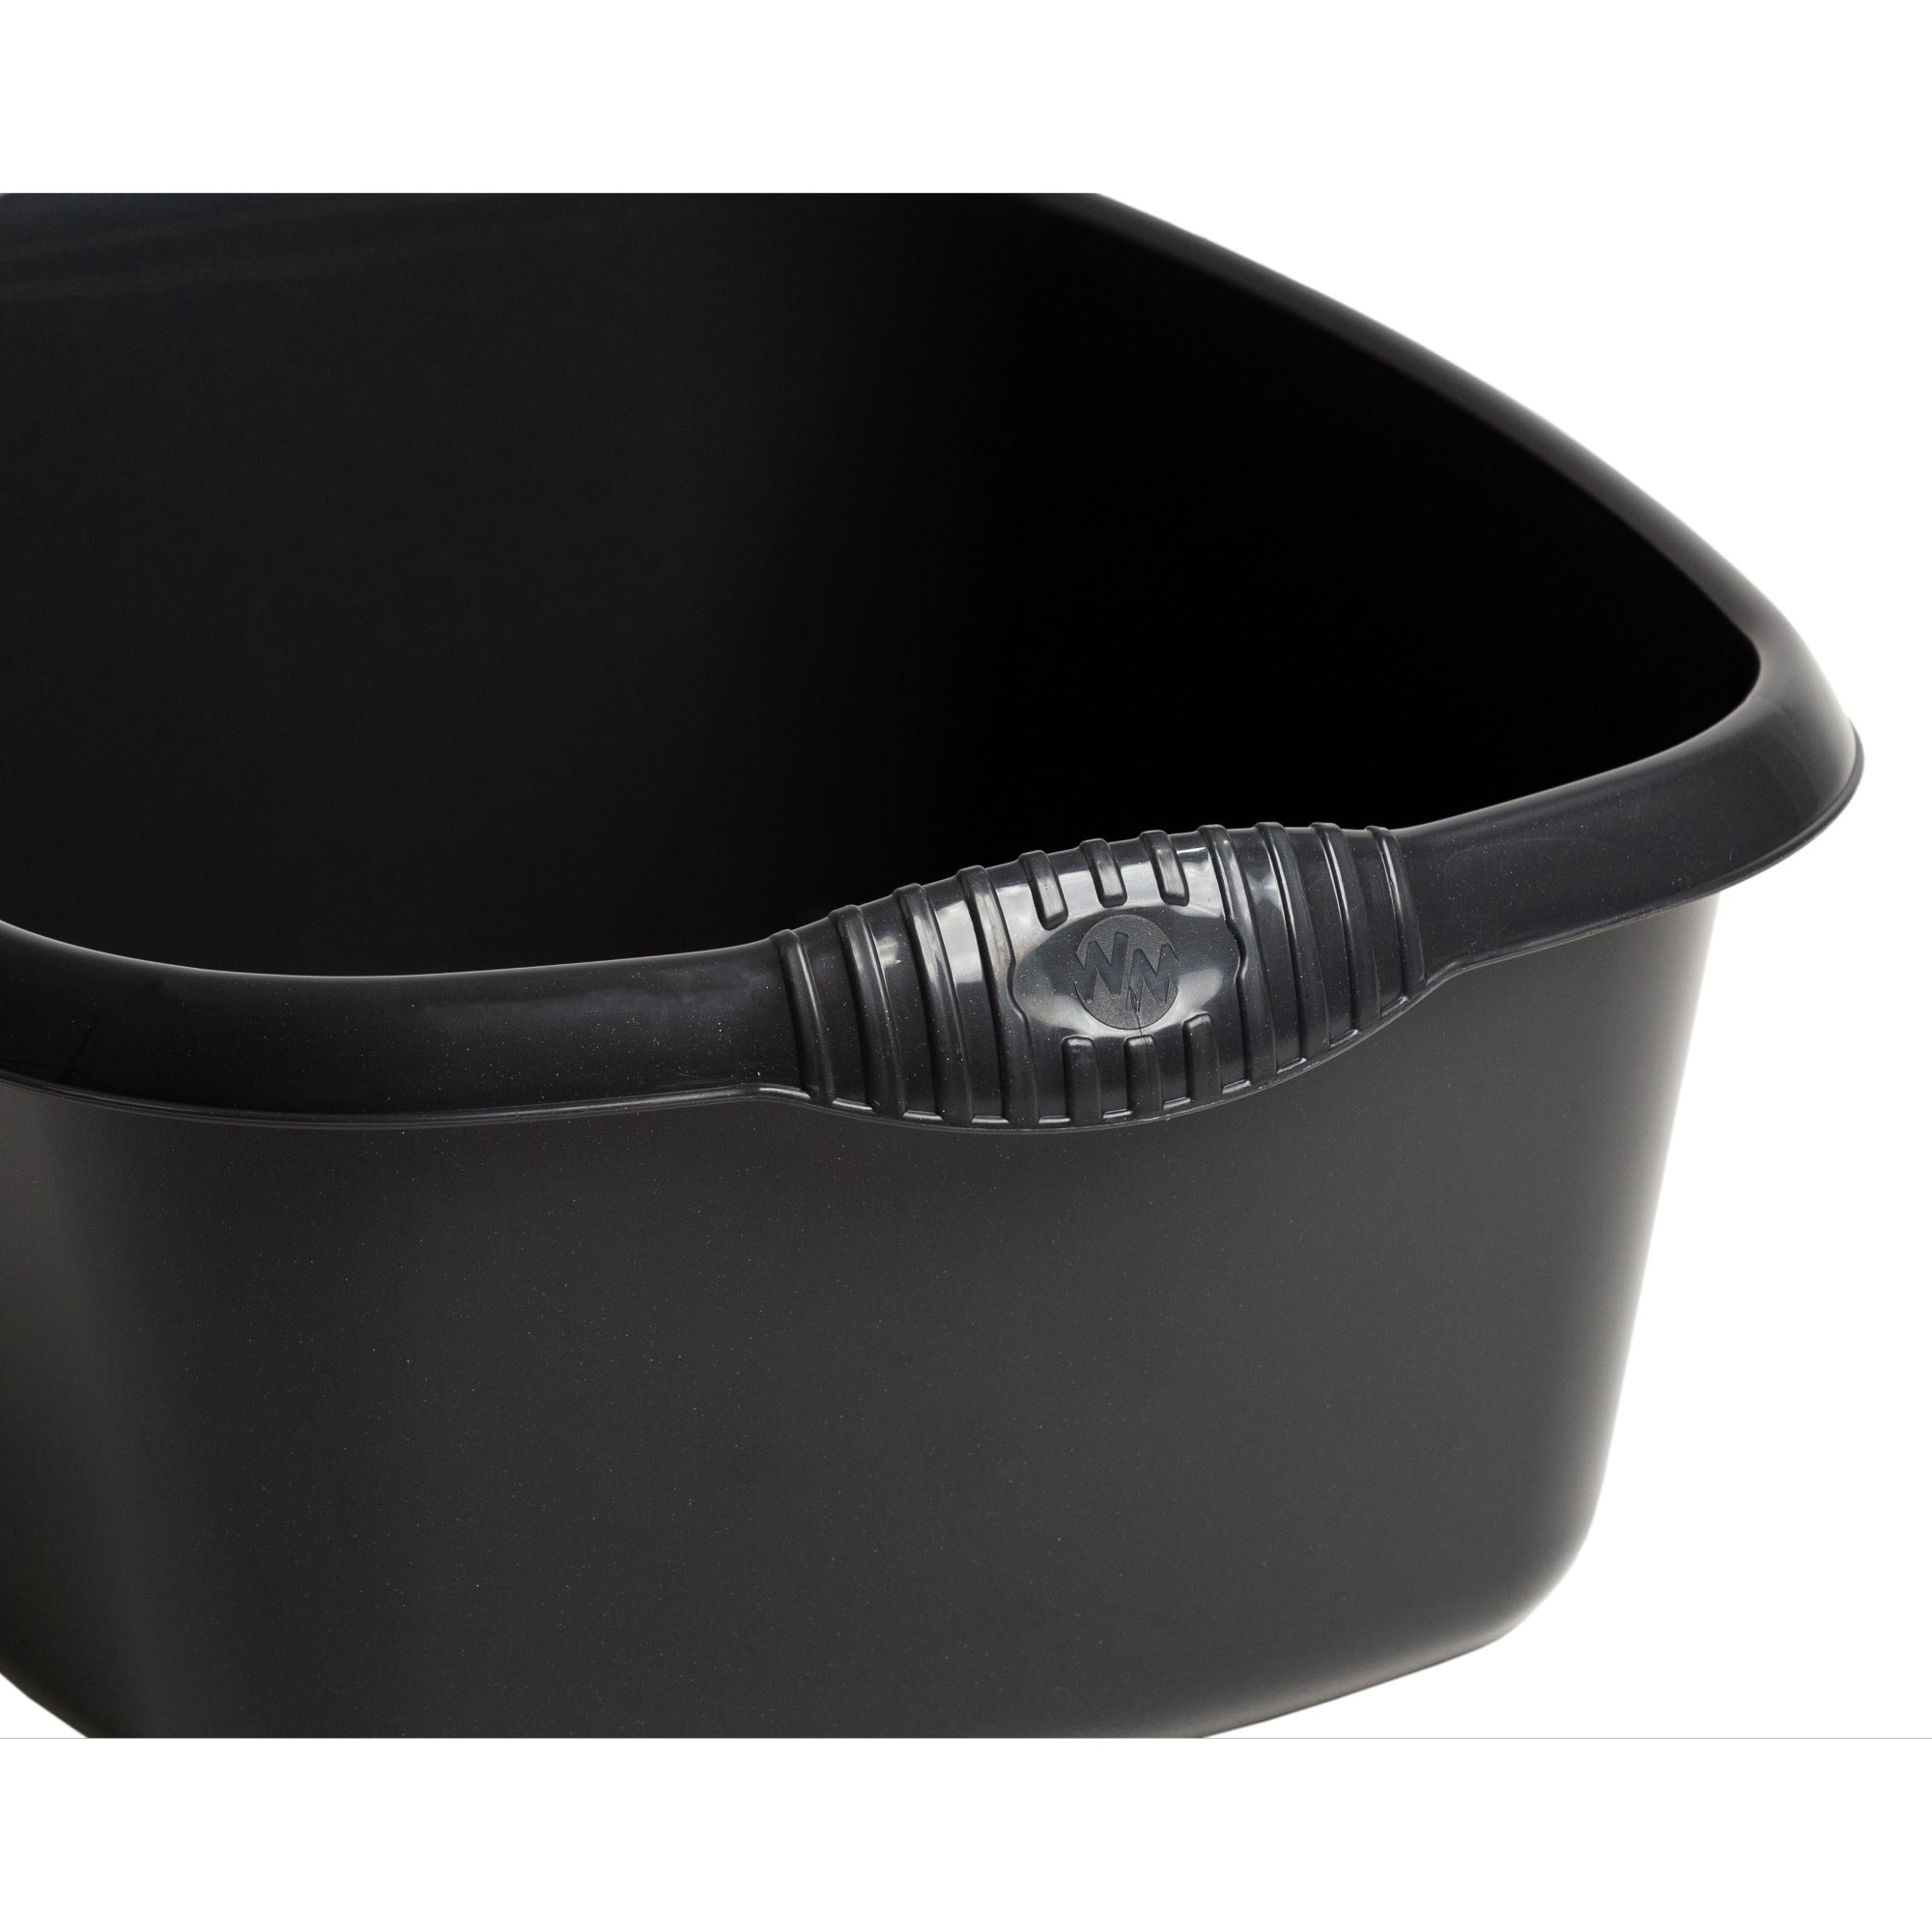 Wham 17229 Casa Plastic Rectangular Washing Up Bowl 39cm - Midnight - Premium Washing Up Bowls from What More UK Ltd - Just $2.80! Shop now at W Hurst & Son (IW) Ltd